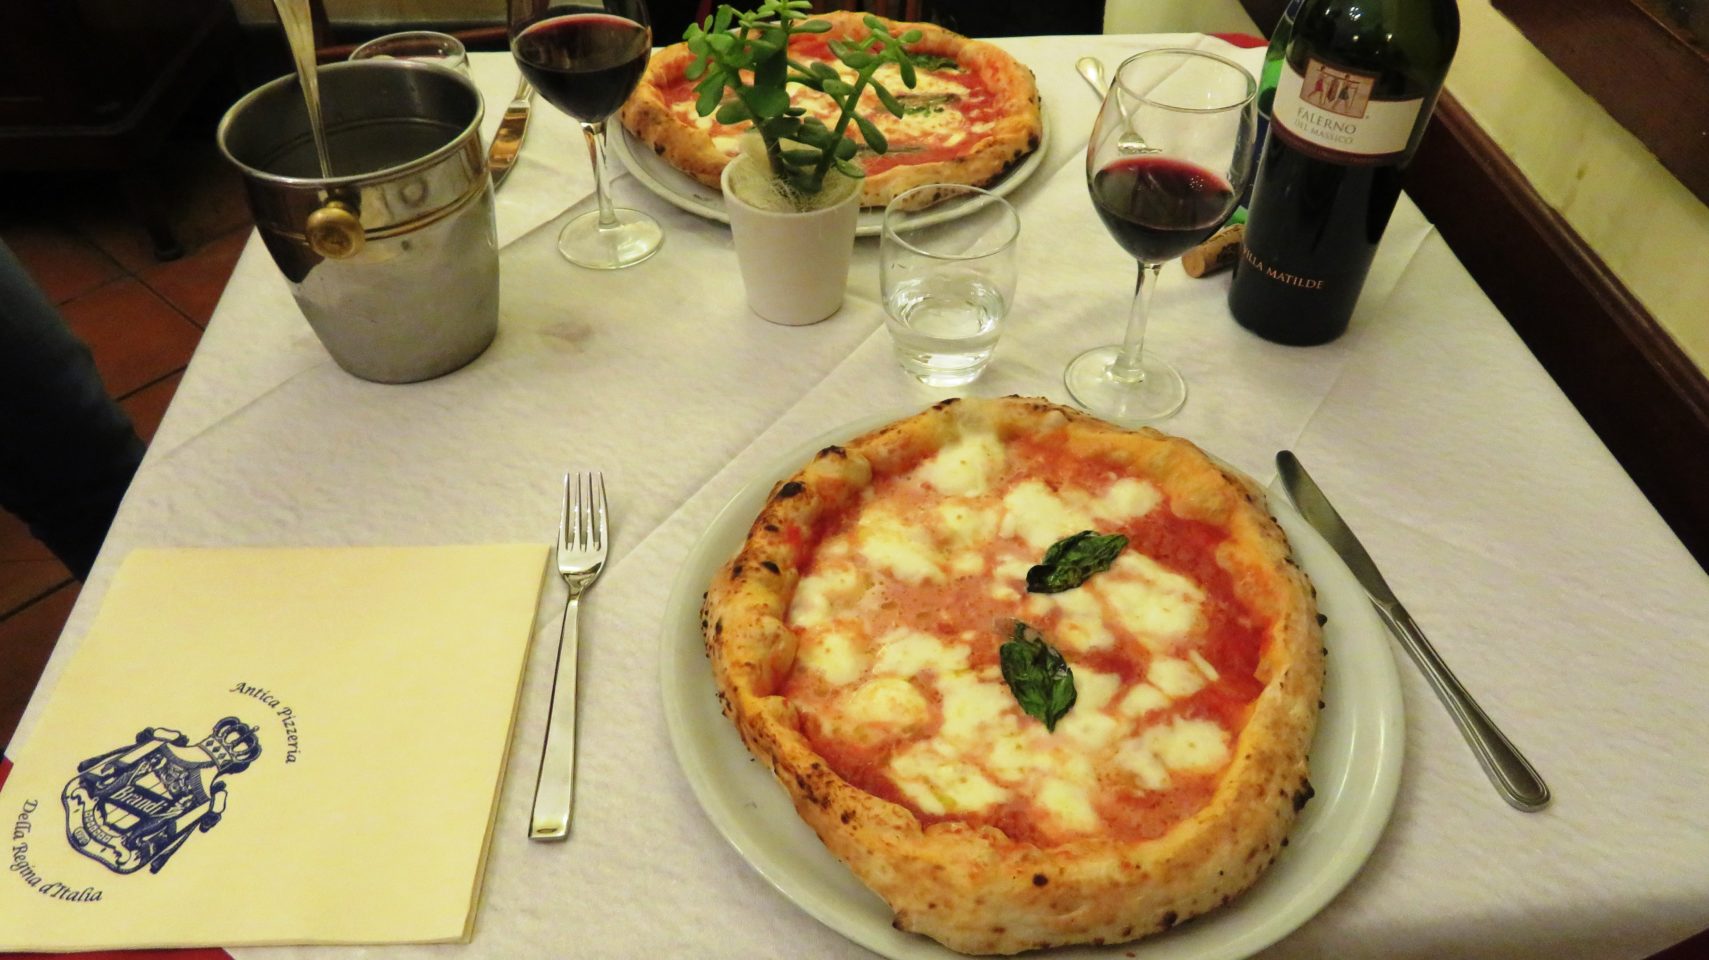 Pizza Margherita at Pizzeria Brandi in Naples Italy